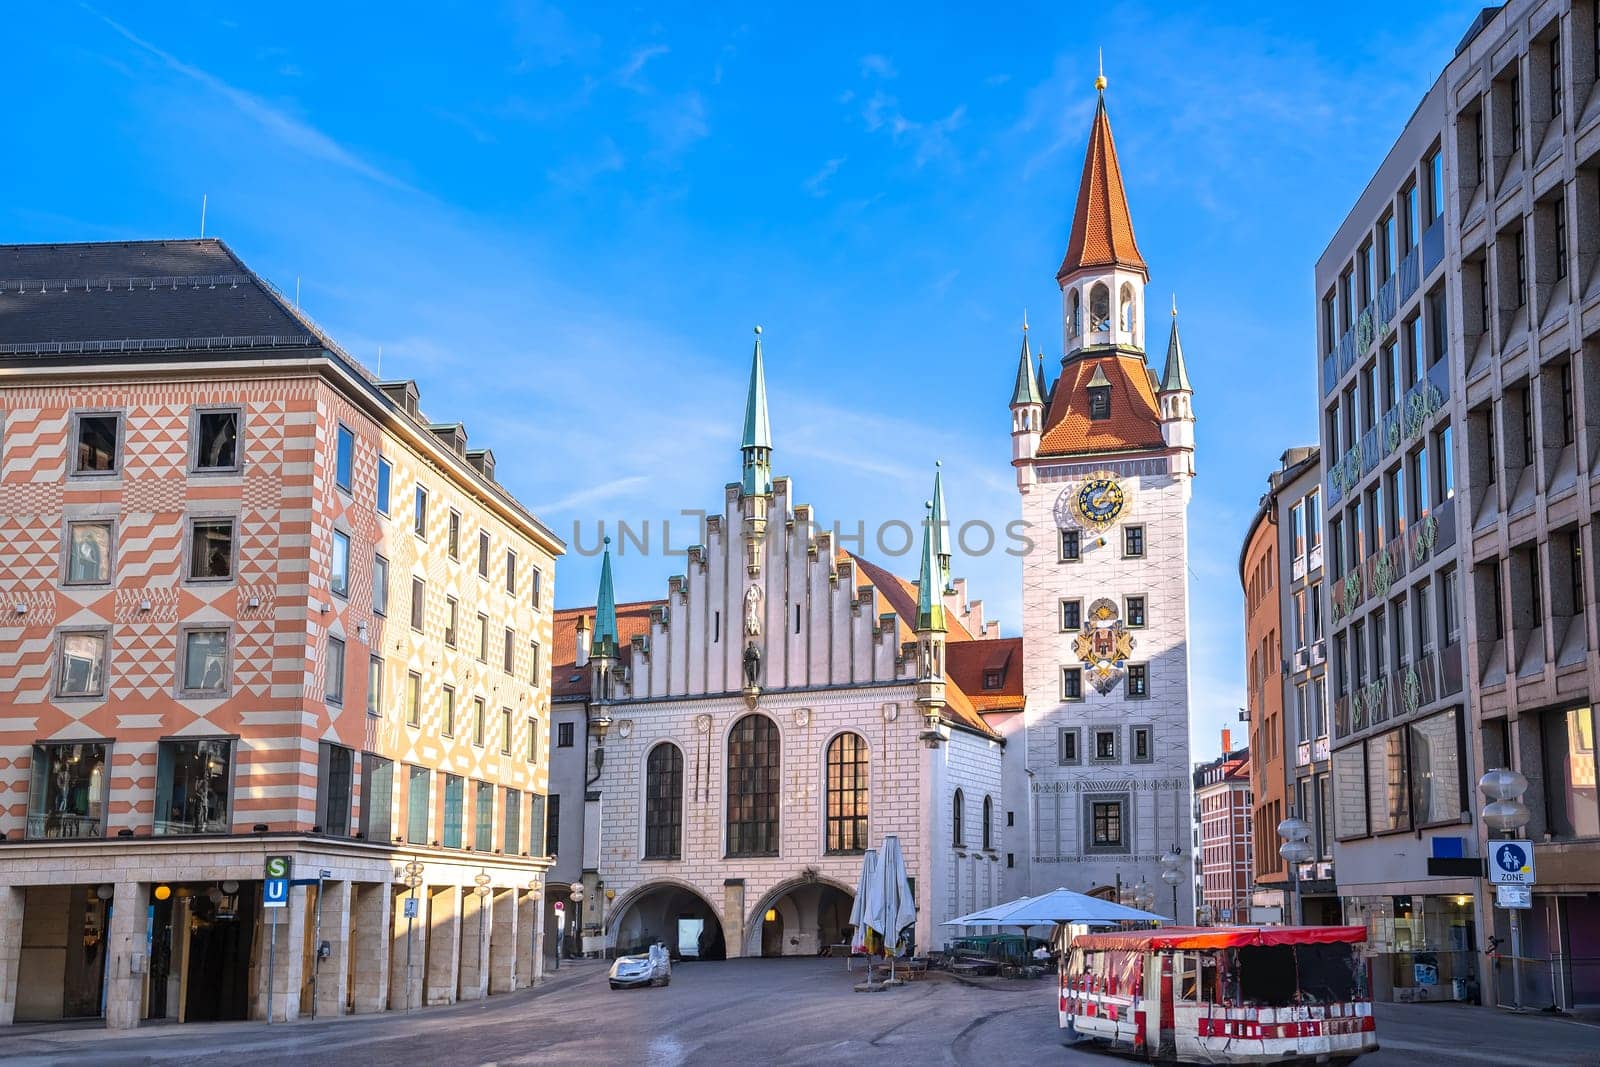 City of Munich Marienplatz square architecture view, Bavaria region of Germany